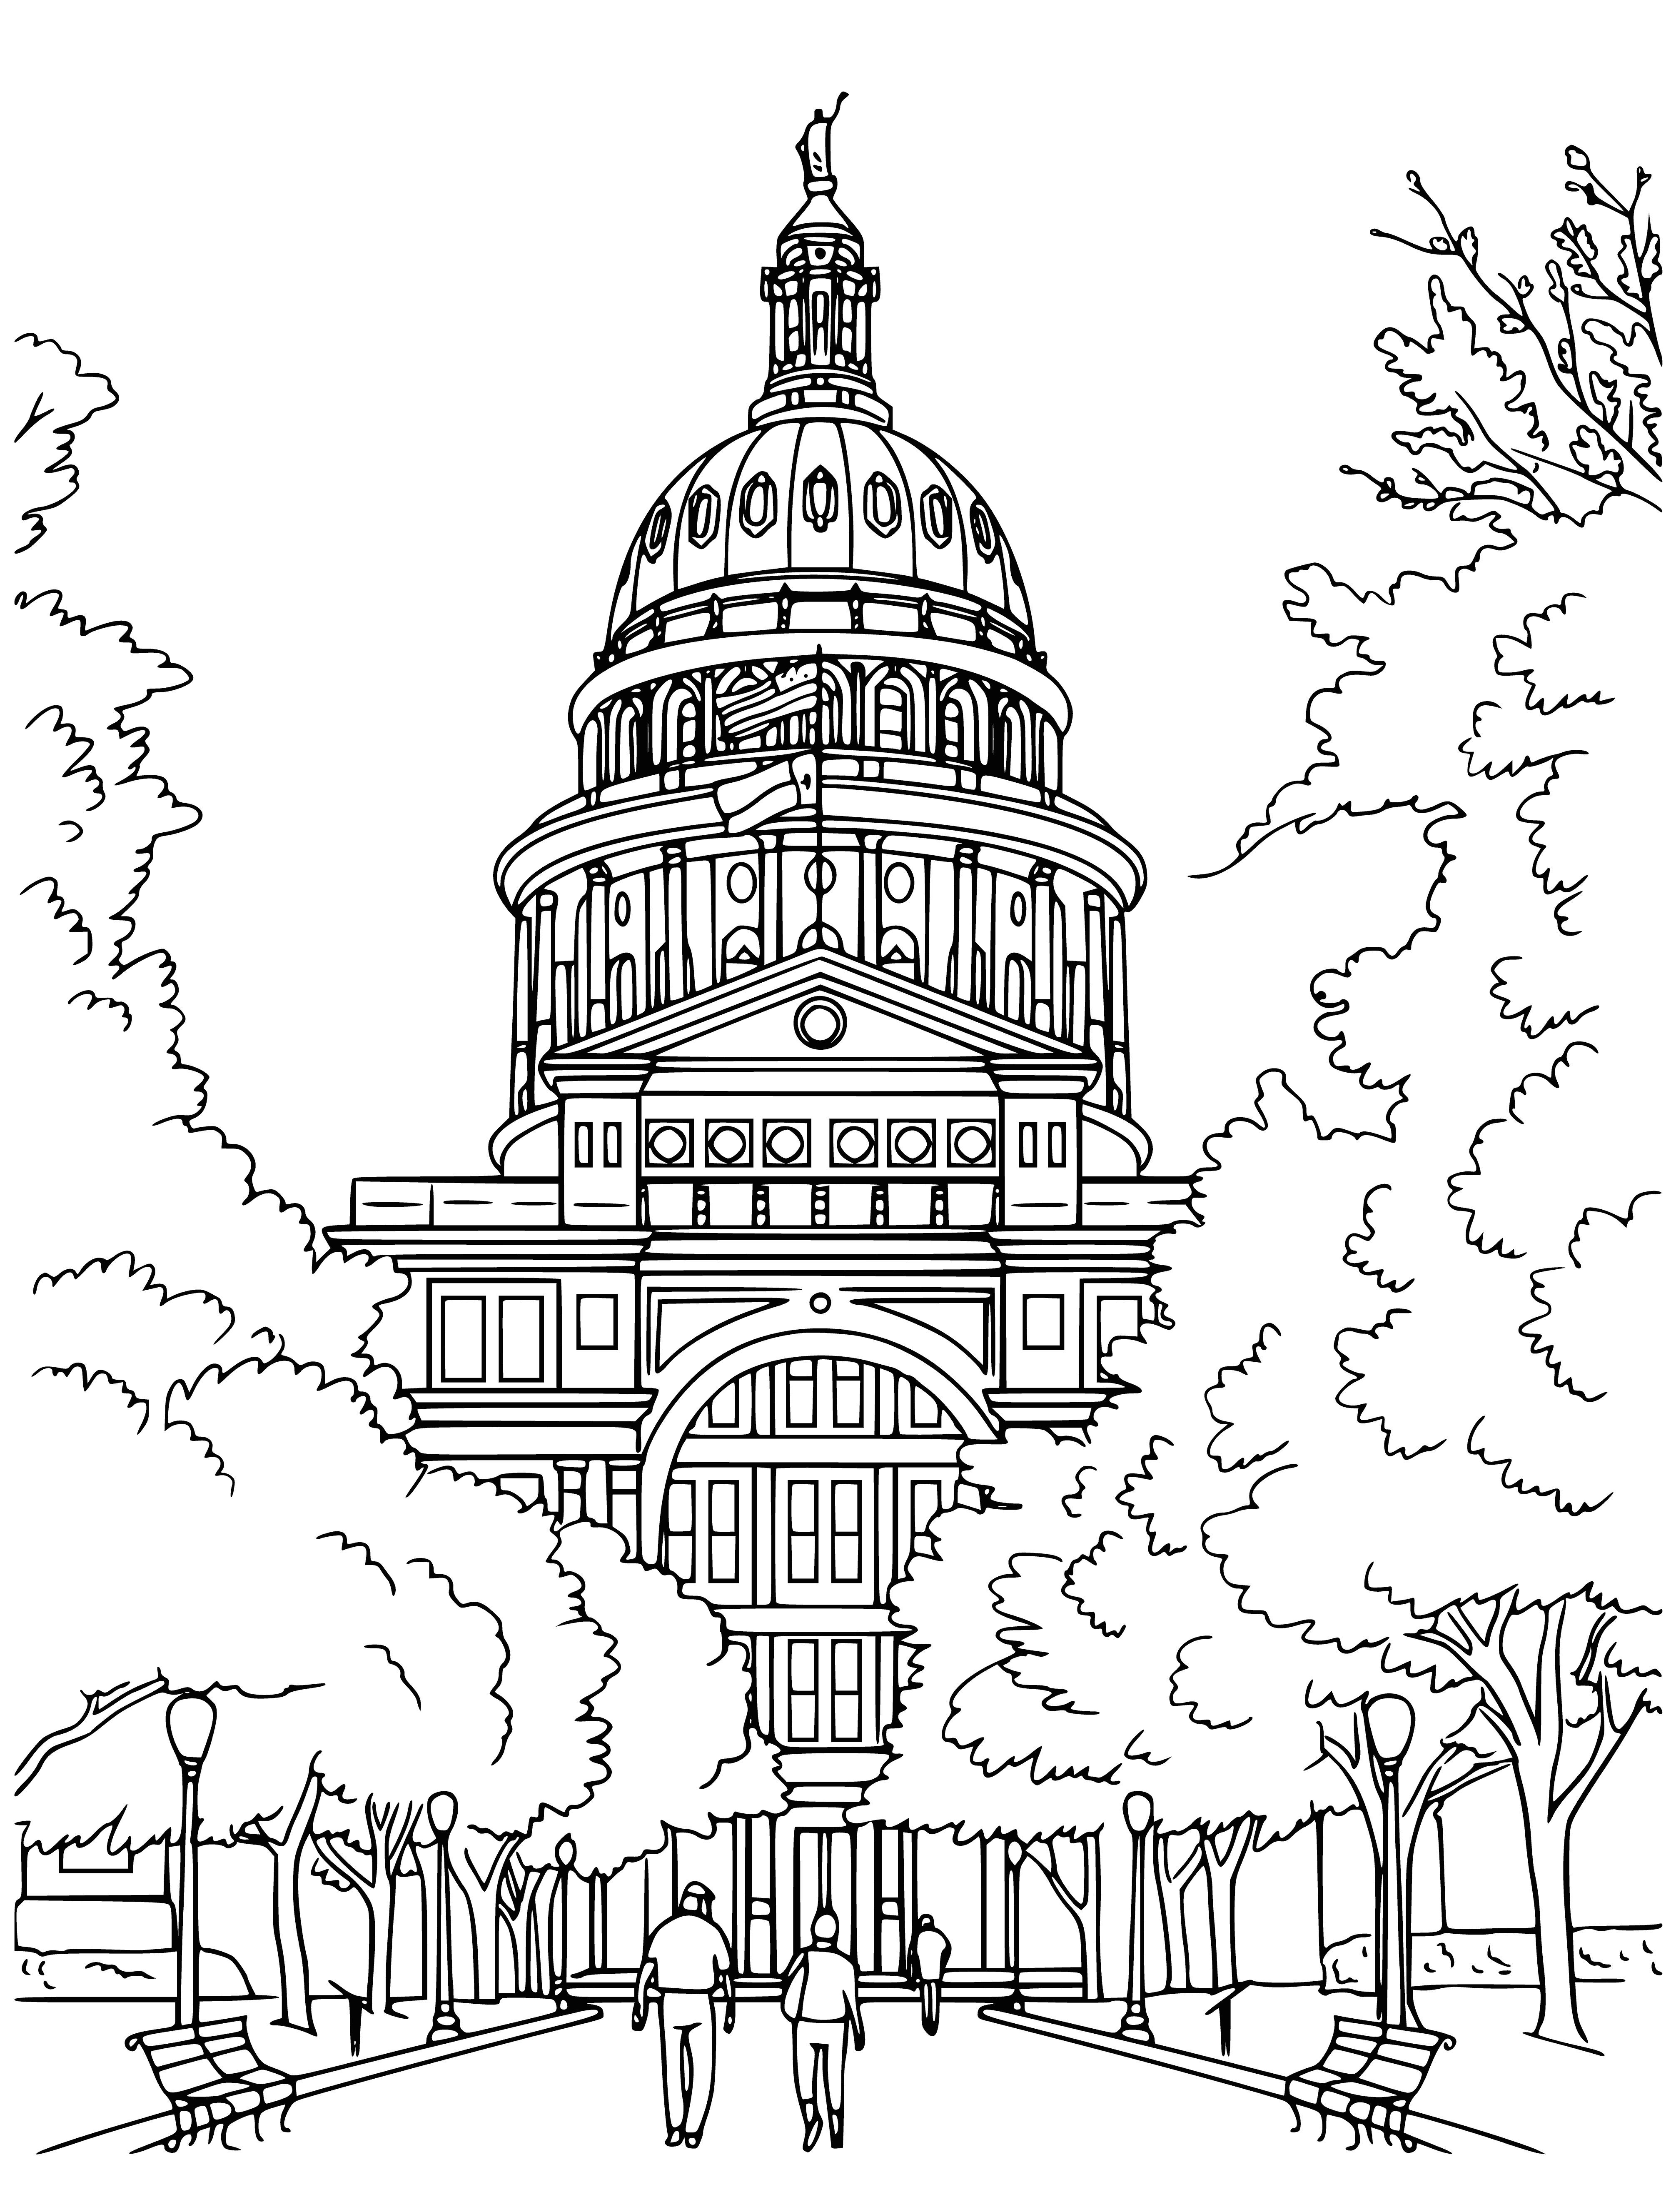 Capitol-gebou in Washington DC. VSA inkleurbladsy